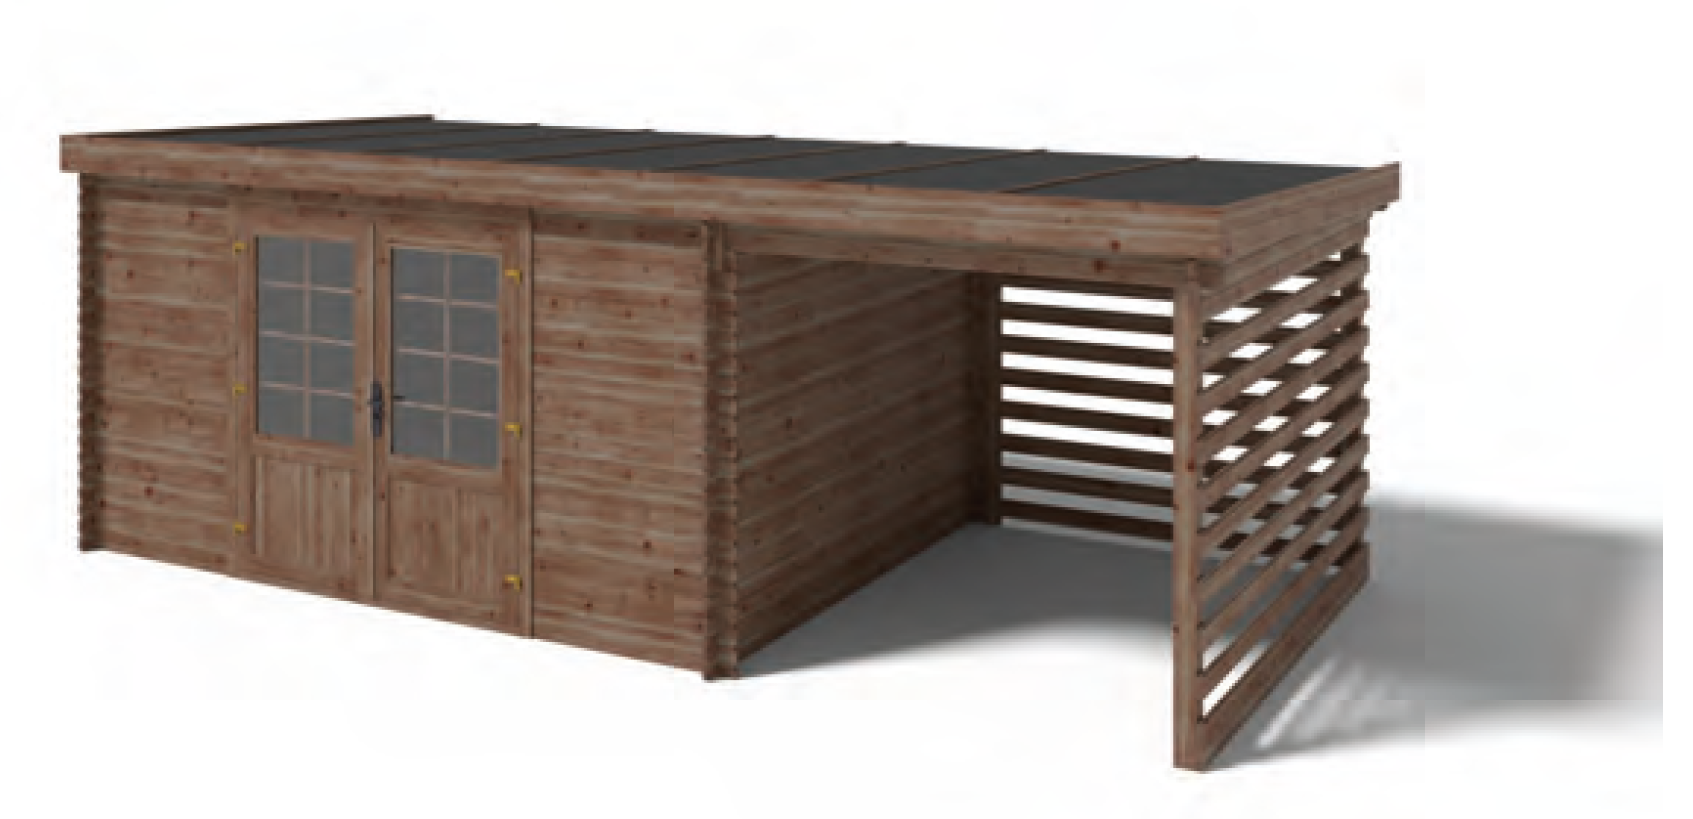 Tromso wooden garden shed 609 x 306 x 215 cm